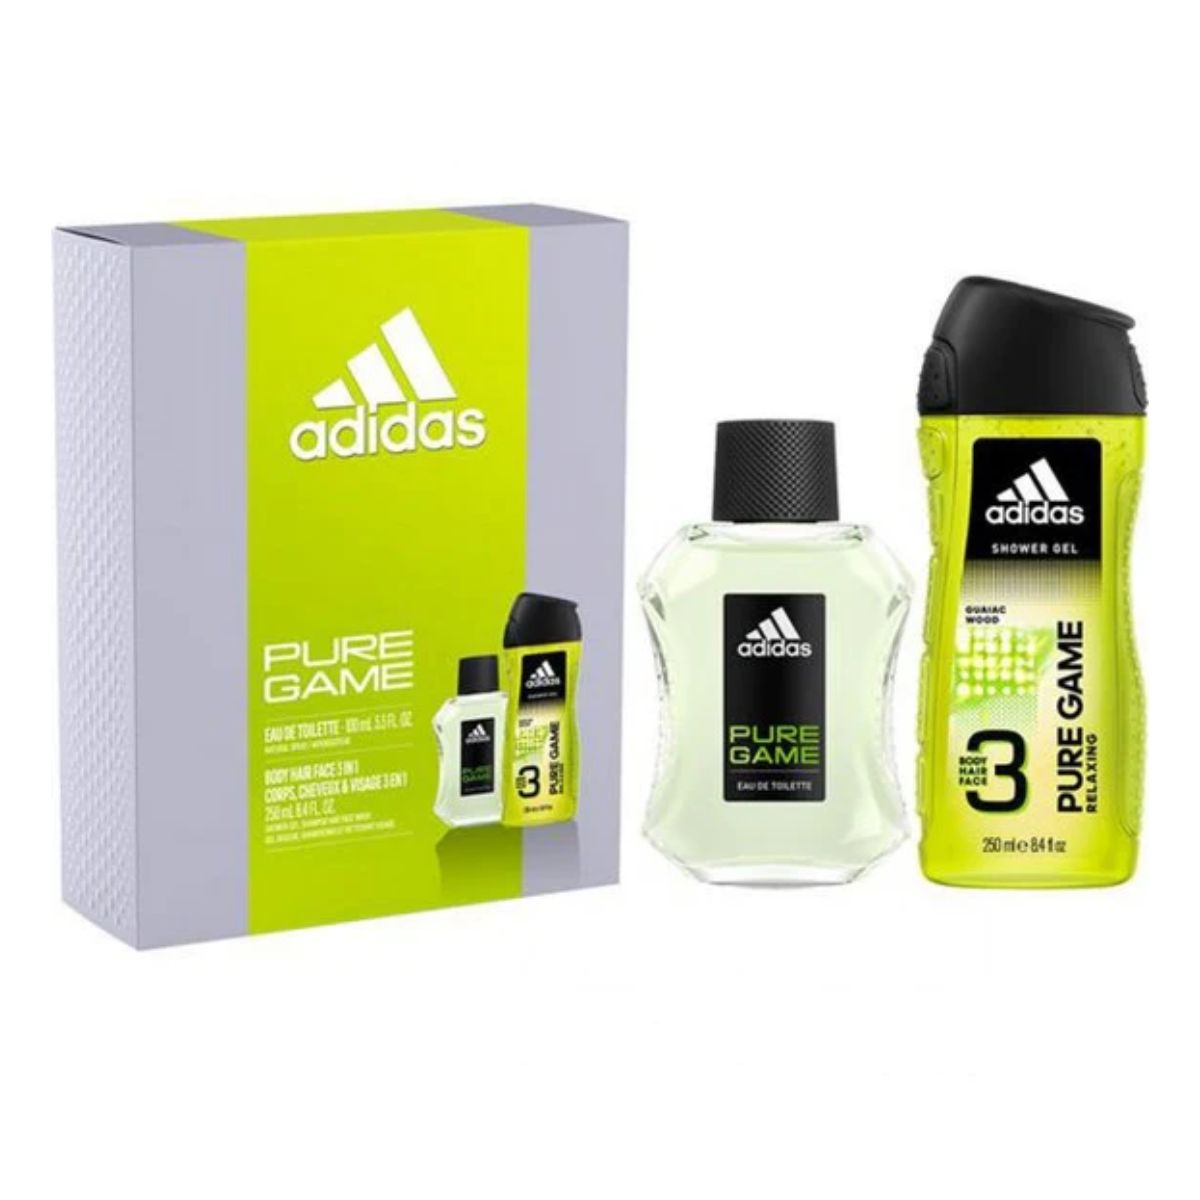 Adidas - Pure Game Edition Kit.